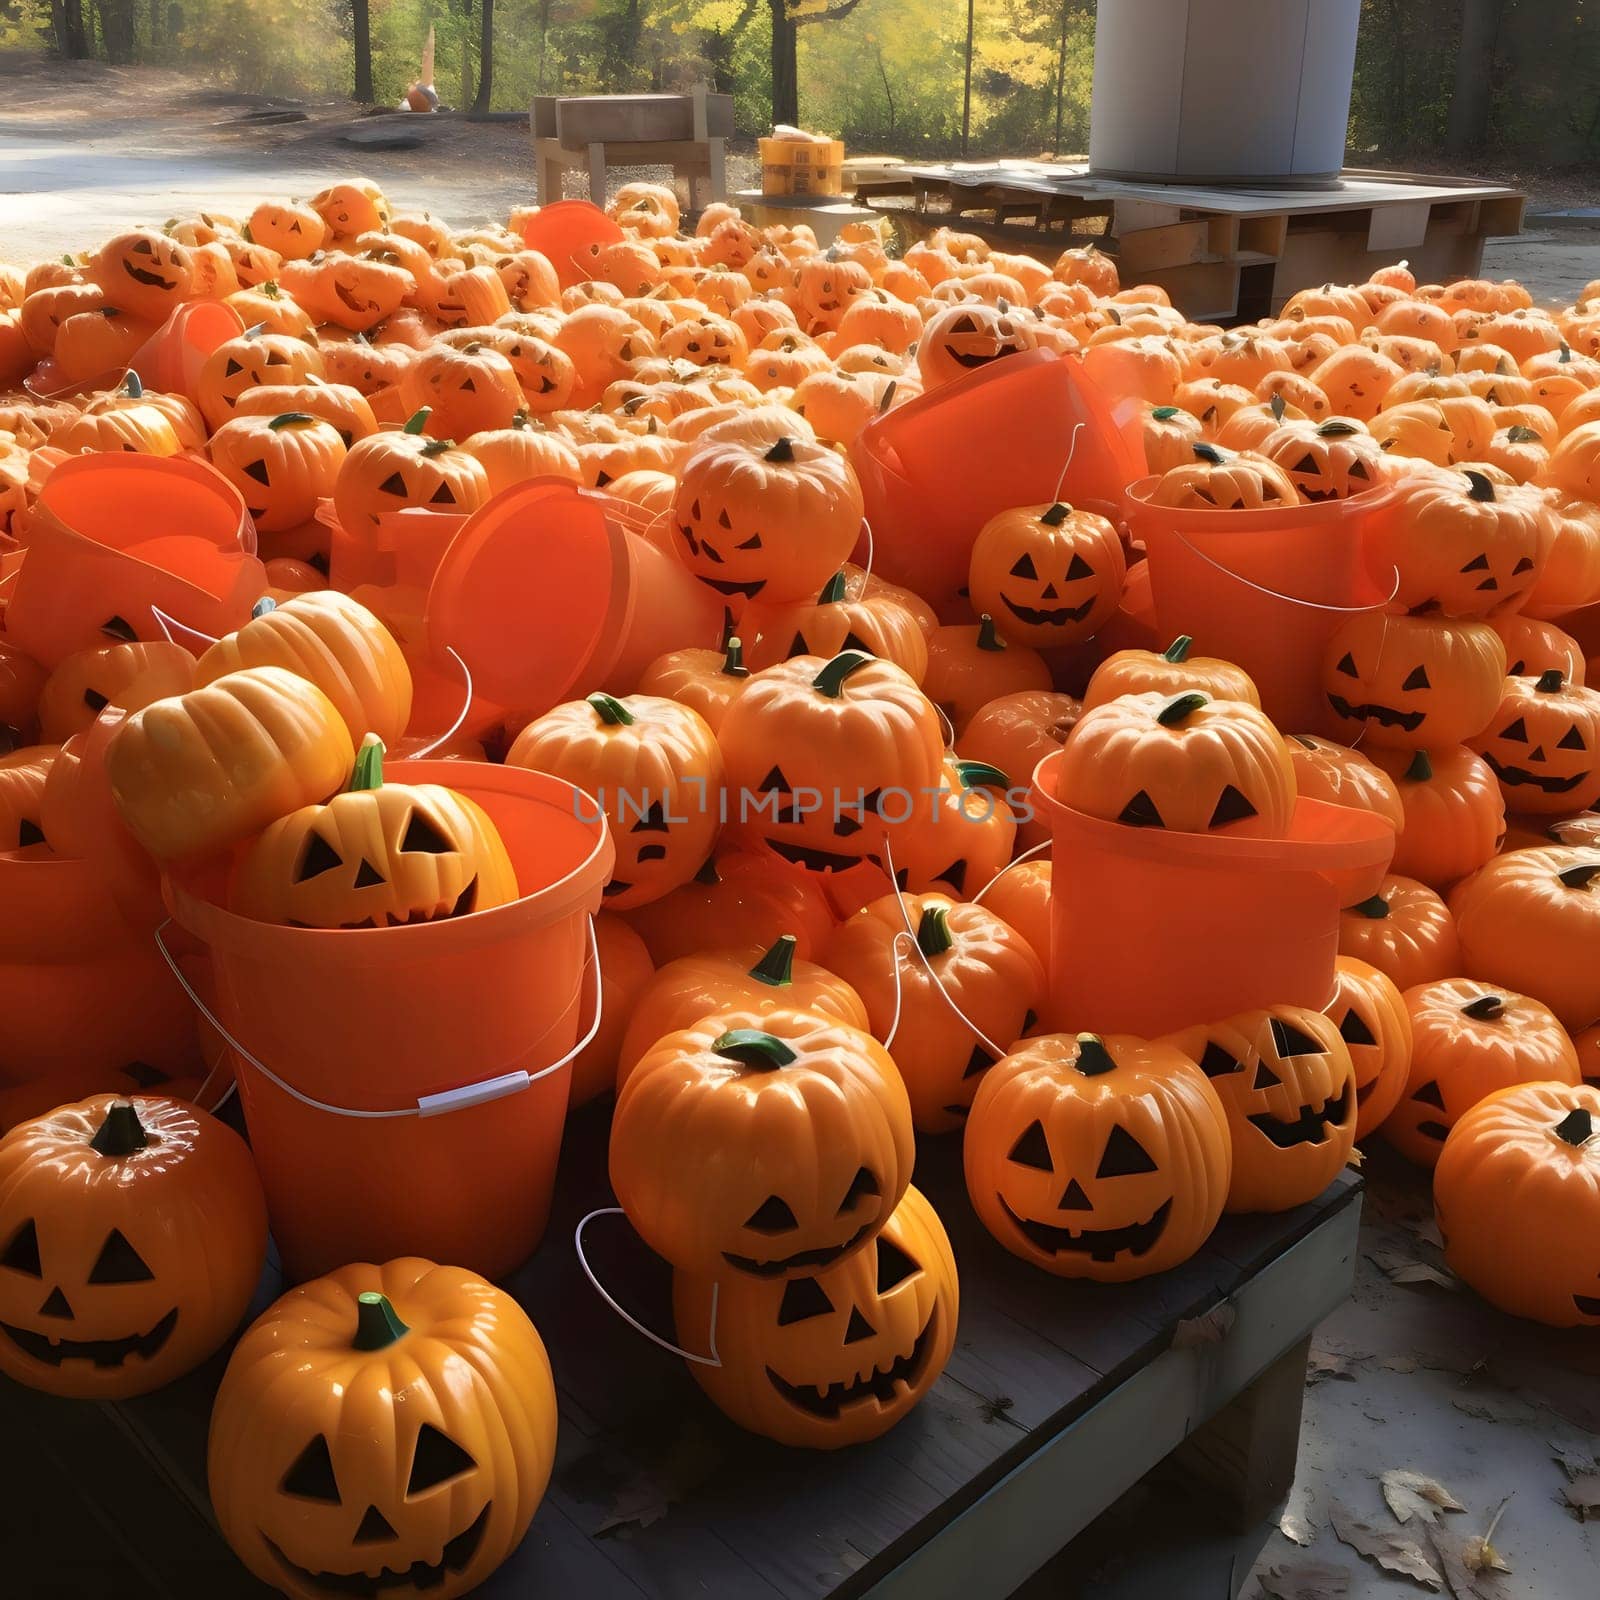 Hundreds of Halloween jack-o-lantern pumpkins and oranges garden buckets, a Halloween image. by ThemesS